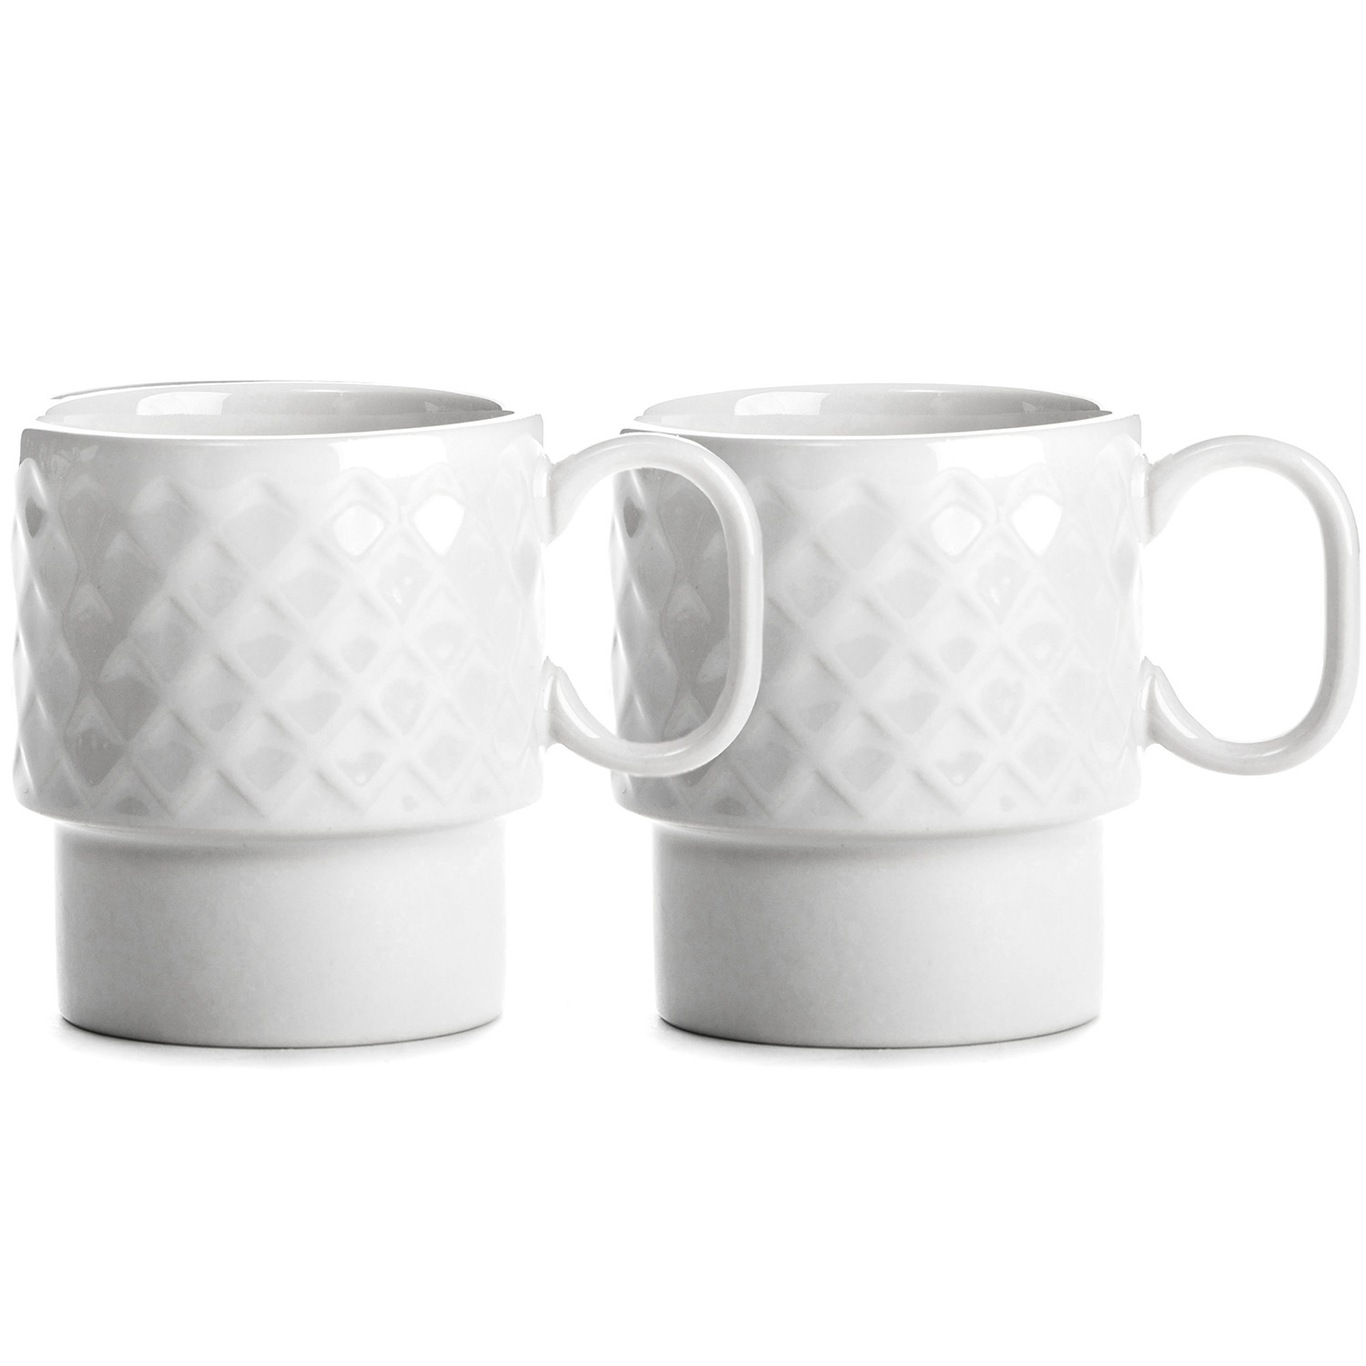 Coffee & More Mug 2-pack, White